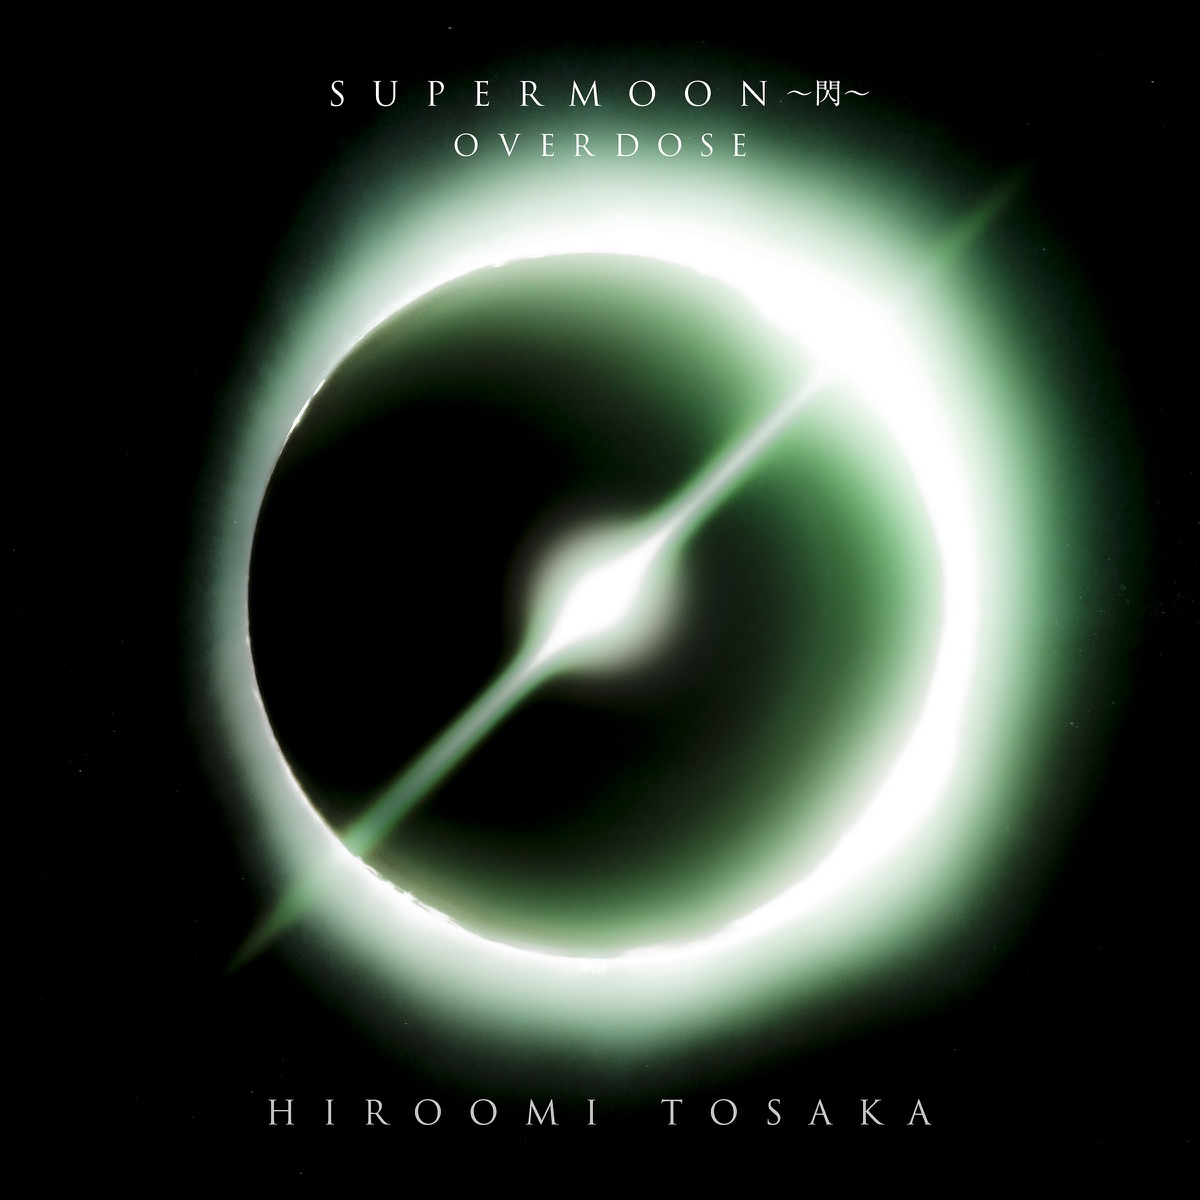 『HIROOMI TOSAKA - OVERDOSE』収録の『OVERDOSE』ジャケット